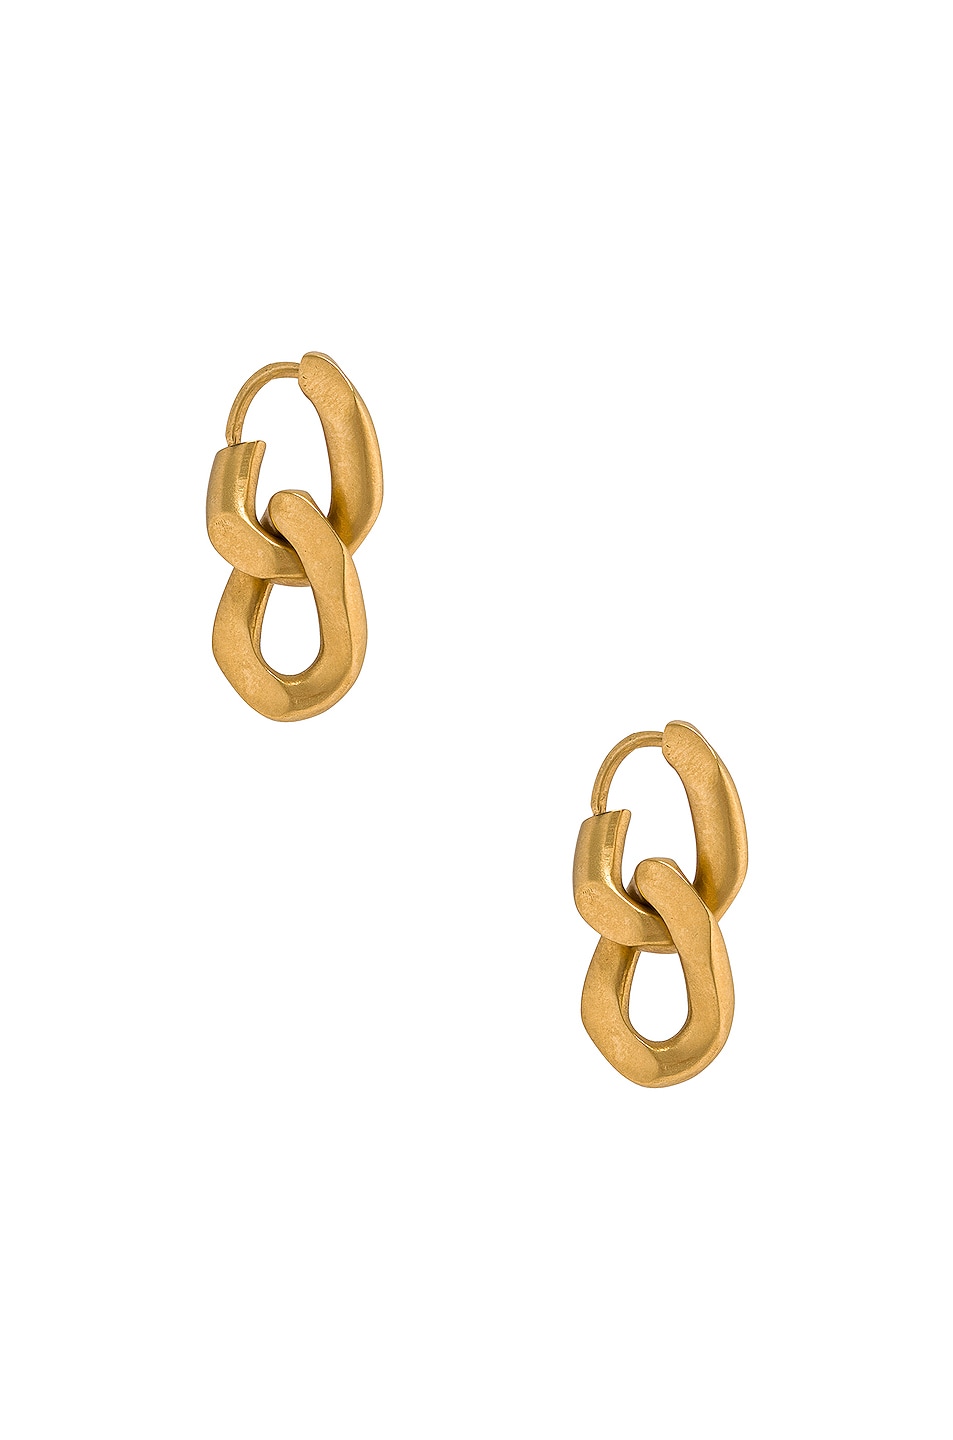 Maison Margiela Chain Earrings in Yellow Gold Plating | FWRD